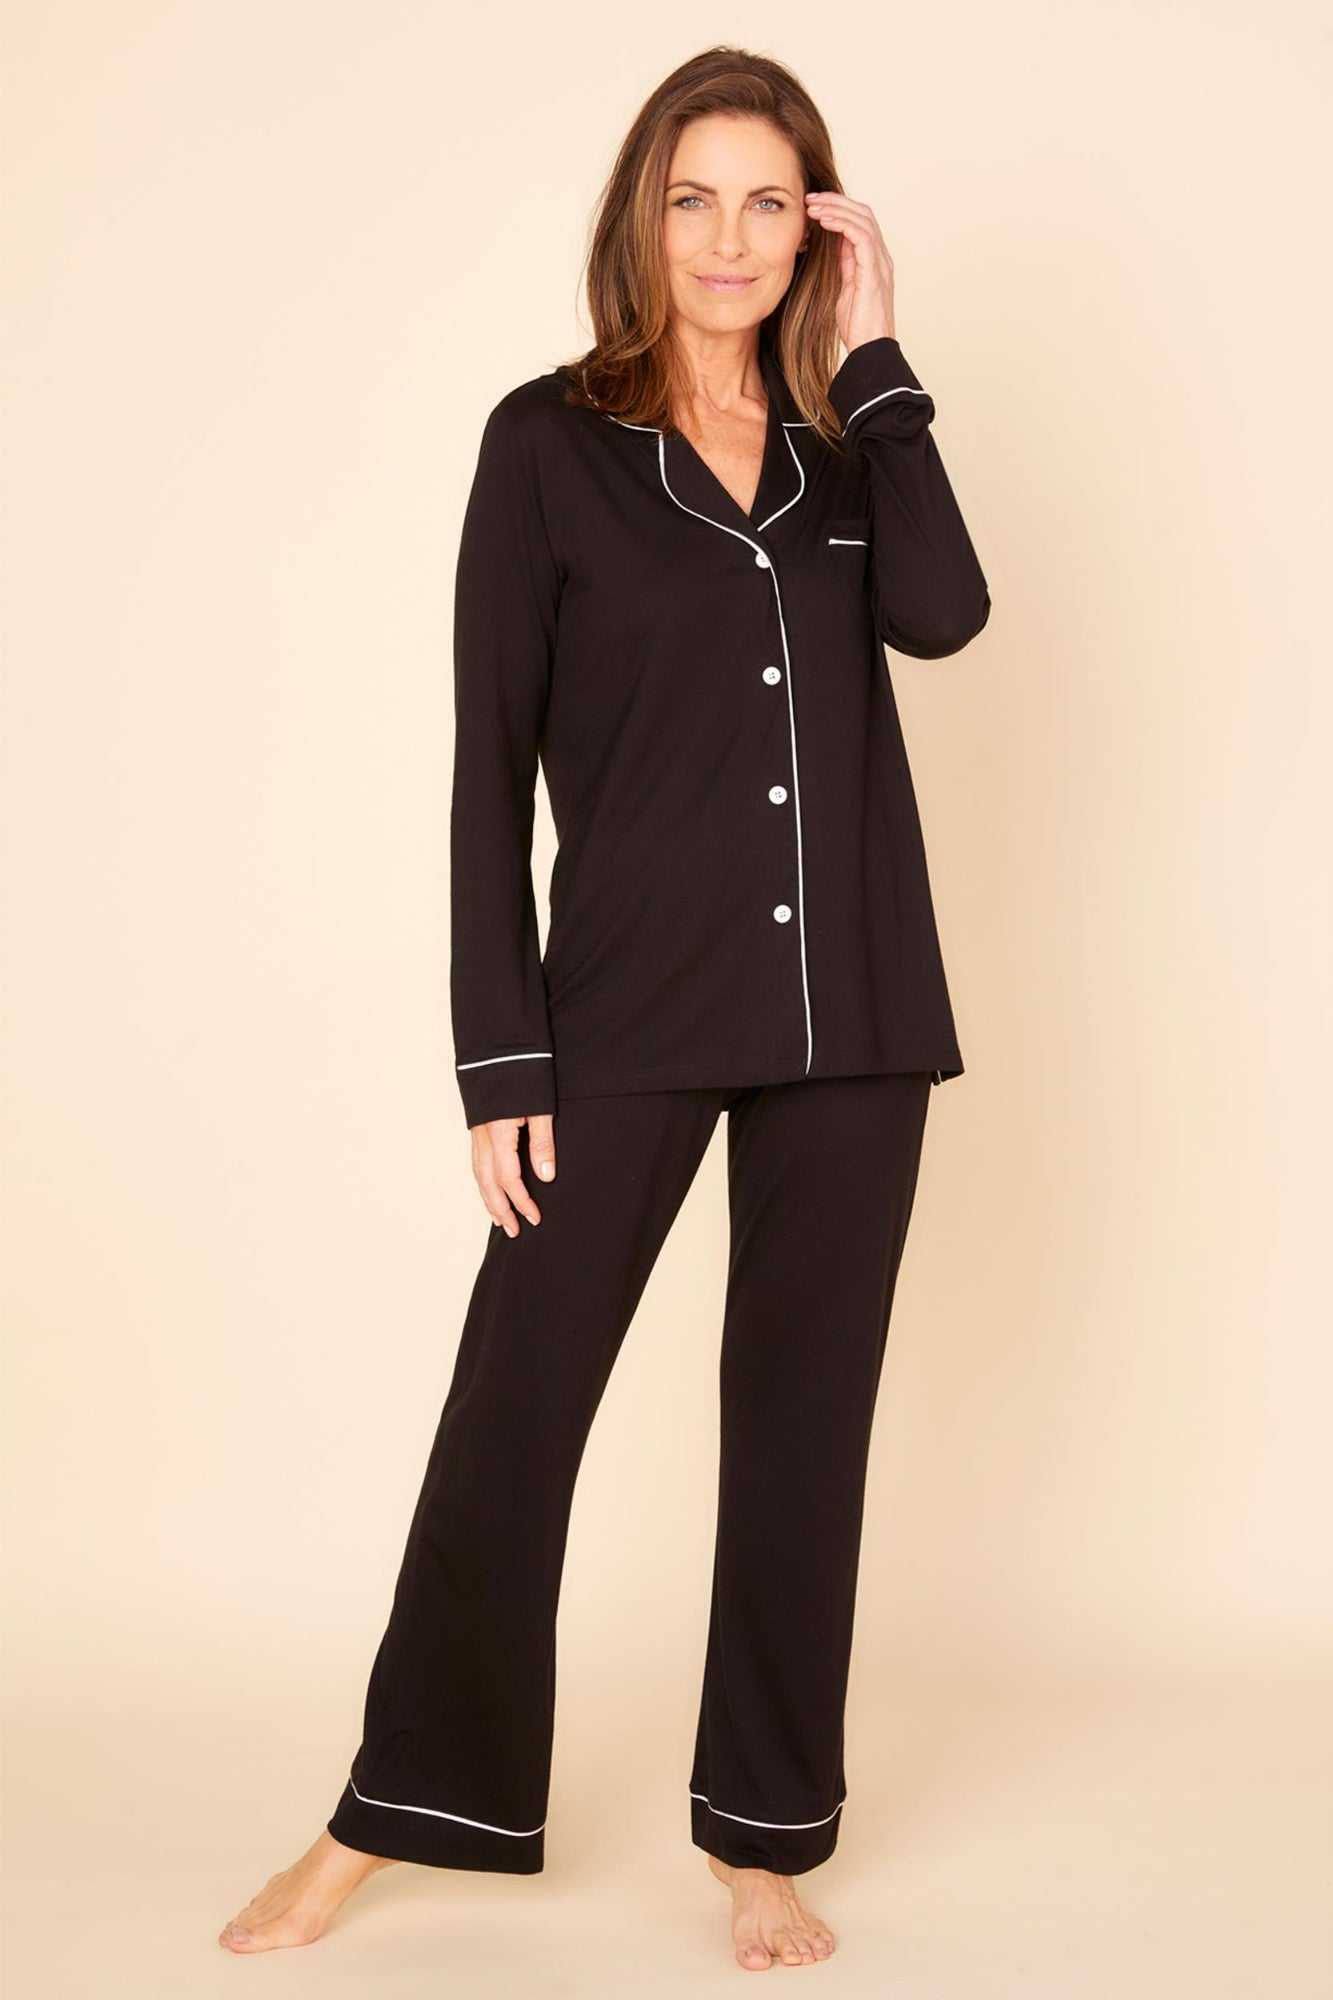 Cosabella Women's Bella Long Sleeve Top & Pant Pajama Set Pajama, Black, 1x Size, Cotton Modal Set